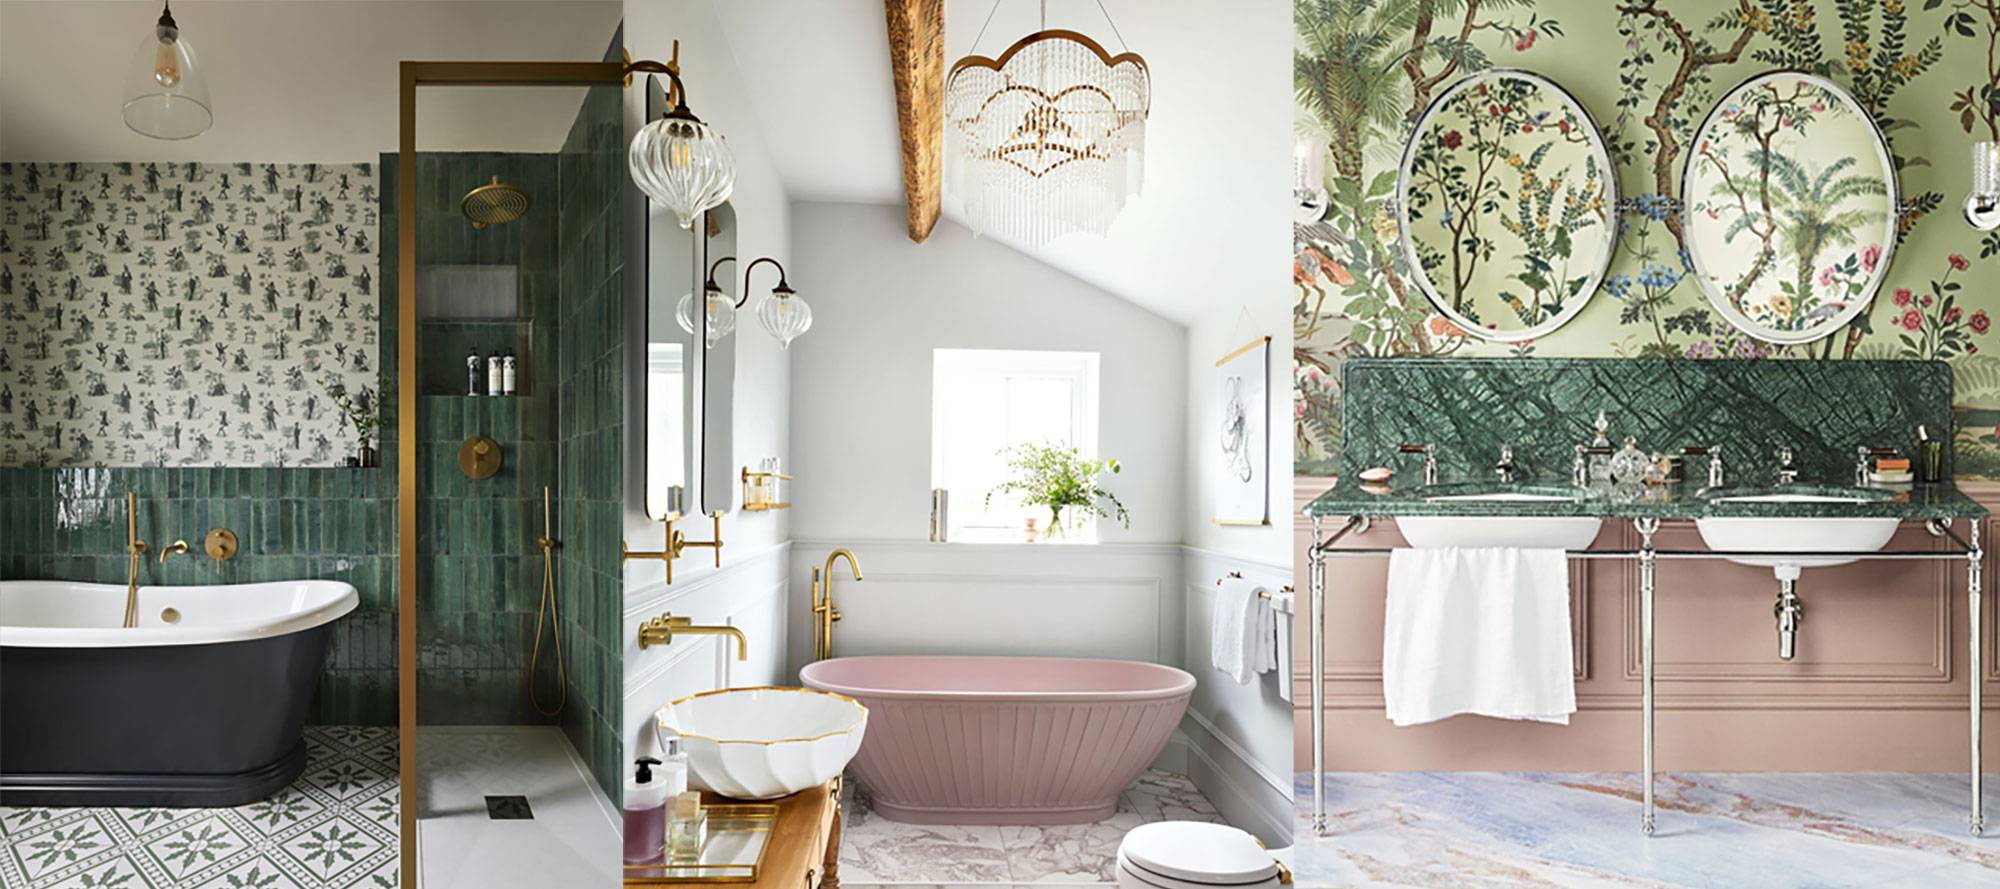 Traditional bathroom ideas: 22 timeless styles & classic decor | Homes &  Gardens |